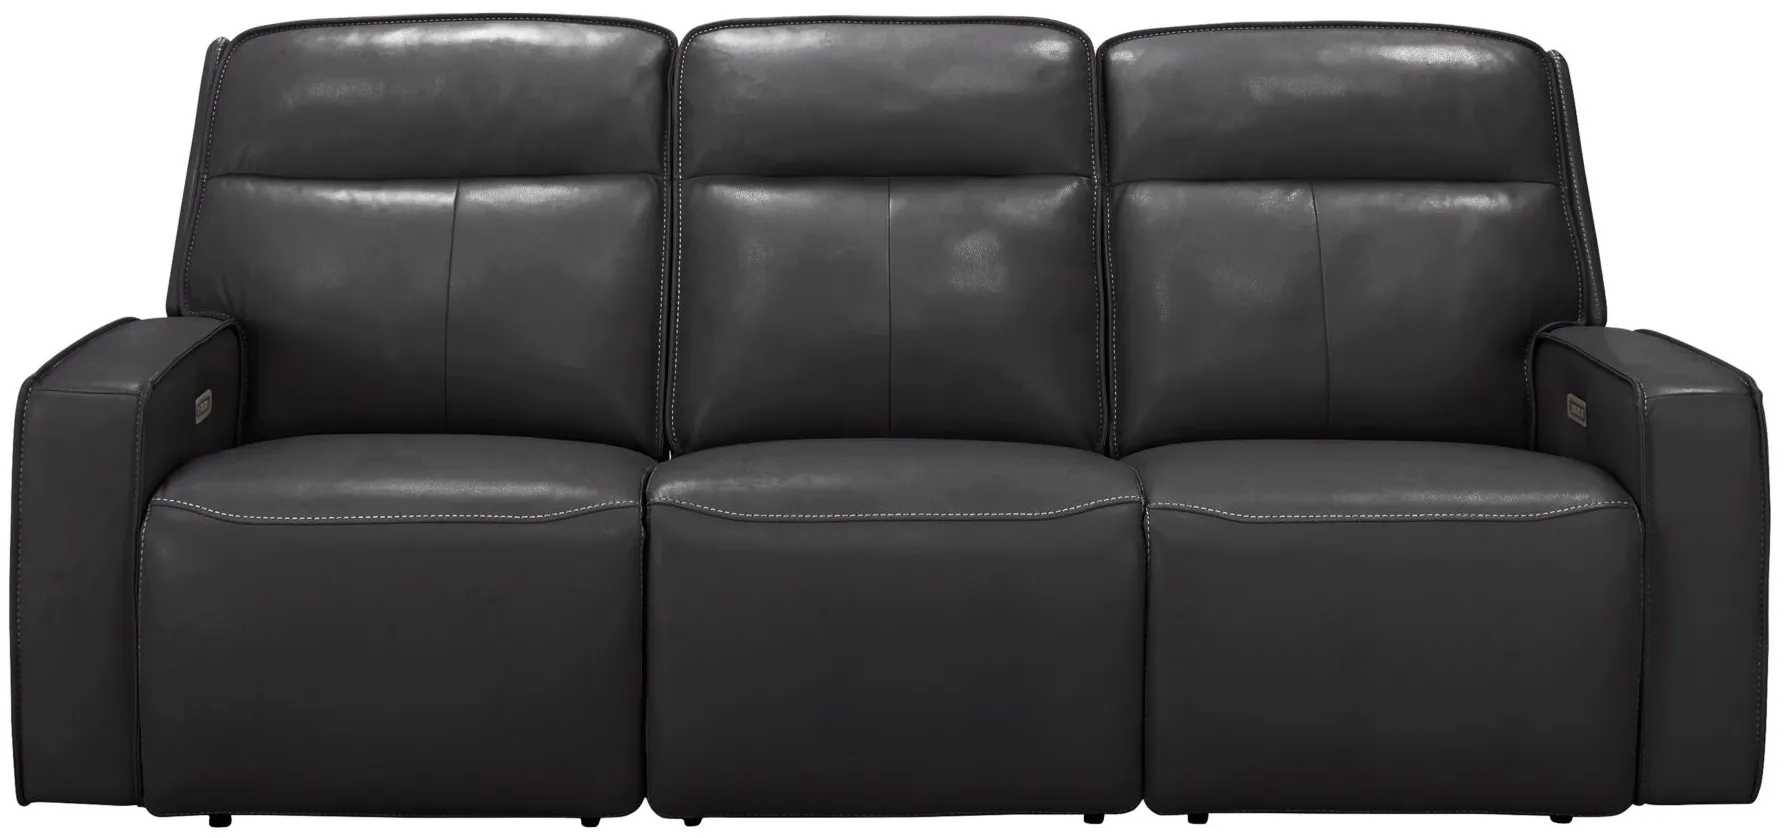 Beckett Power Sofa w/ Power Headrest and Lumbar Support in Gray by Bellanest